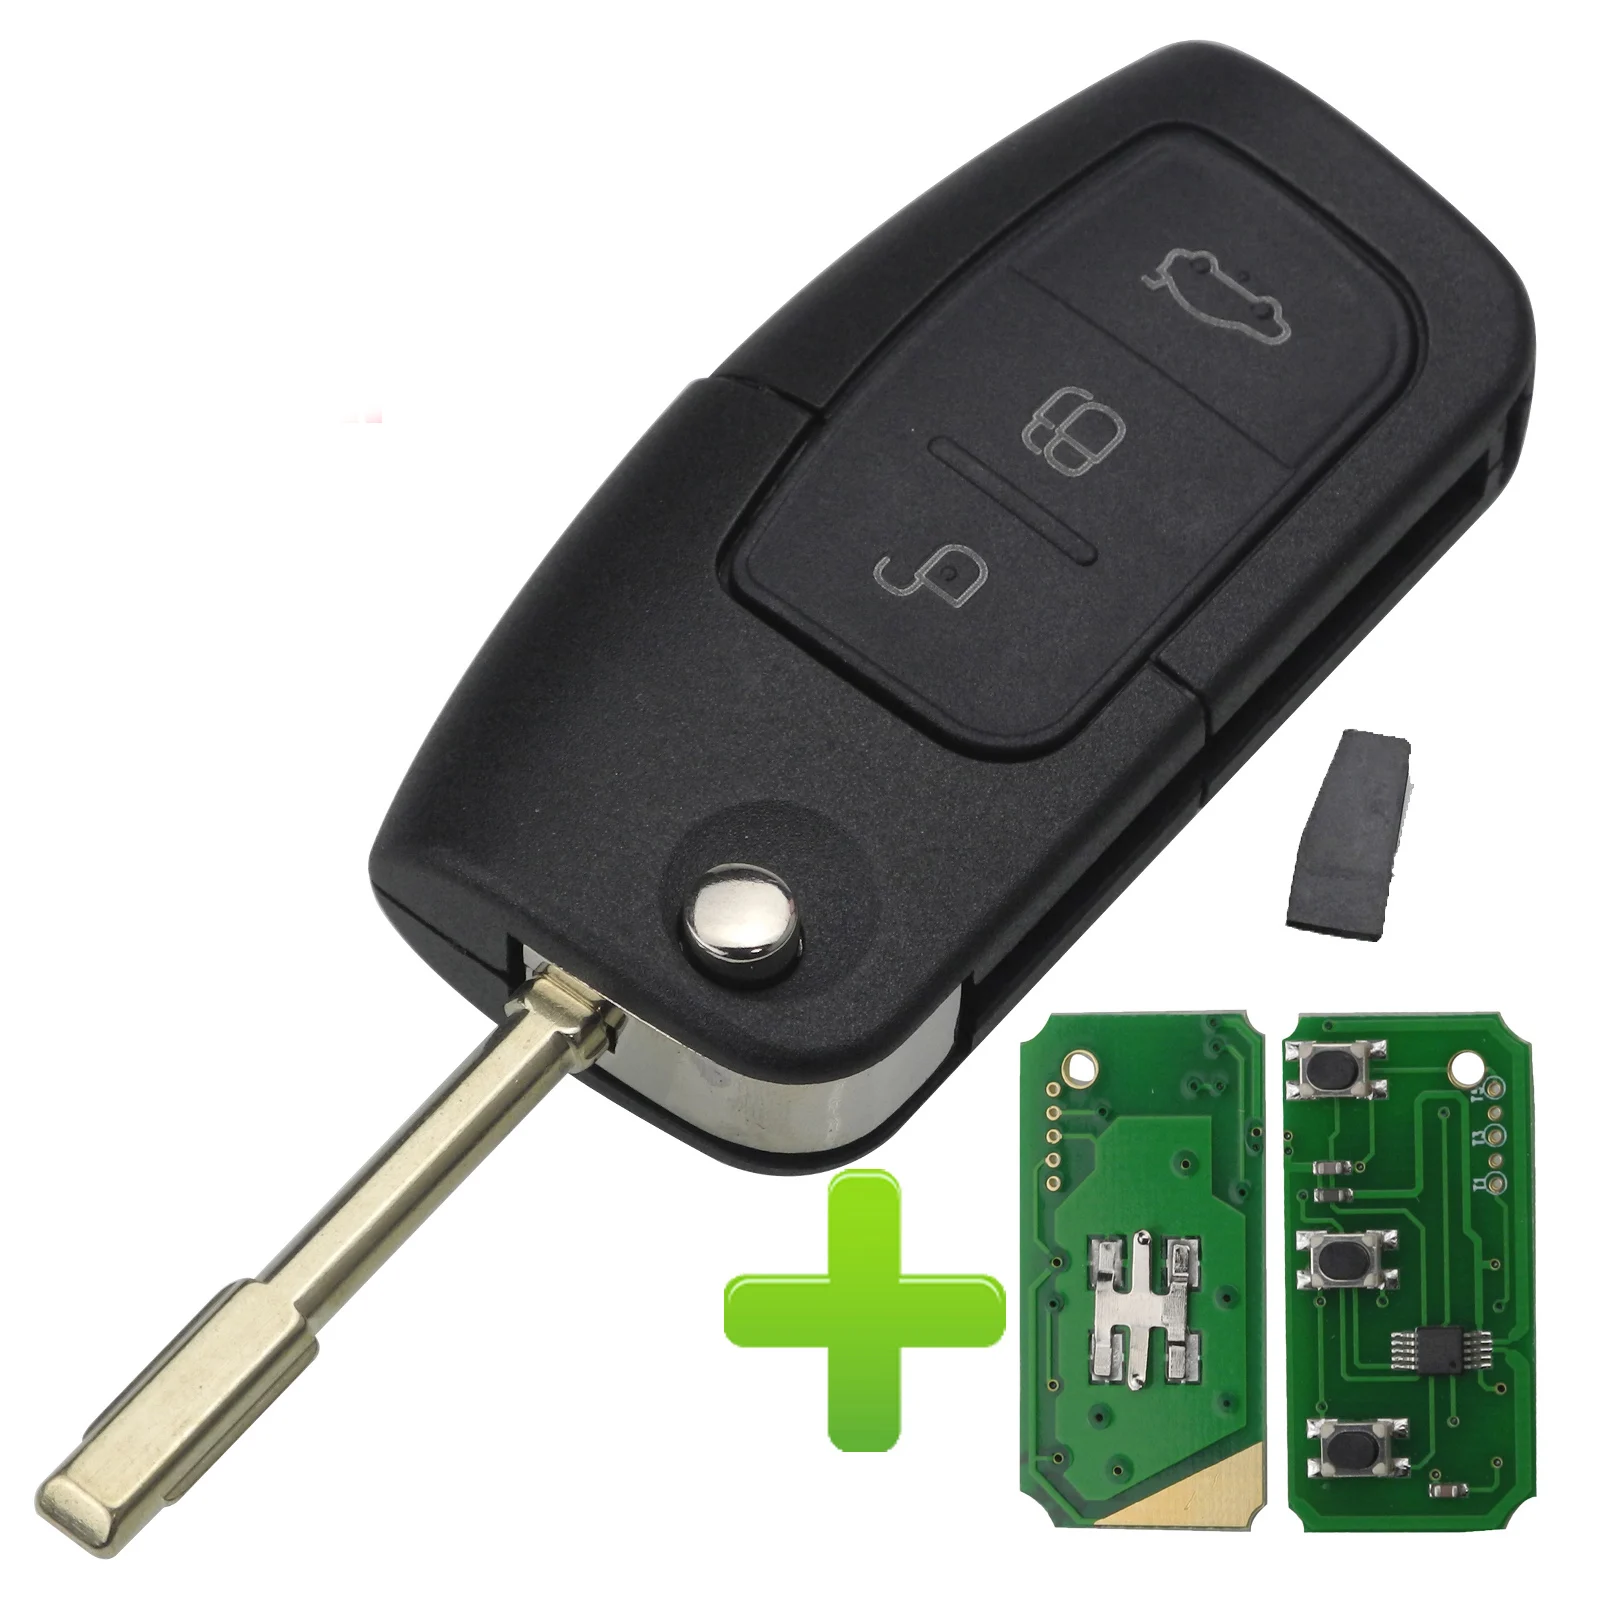 Jingyuqin флип дистанционный ключ для автомобиля с FO21 4D63/60 ID63/60 40/80bit чип 433 МГц для Ford Focus Fiesta C Max Ka Mondeo Galaxy S 3 BTN с бесплатной доставкой - Цвет: 433mhz 4D63 40bit